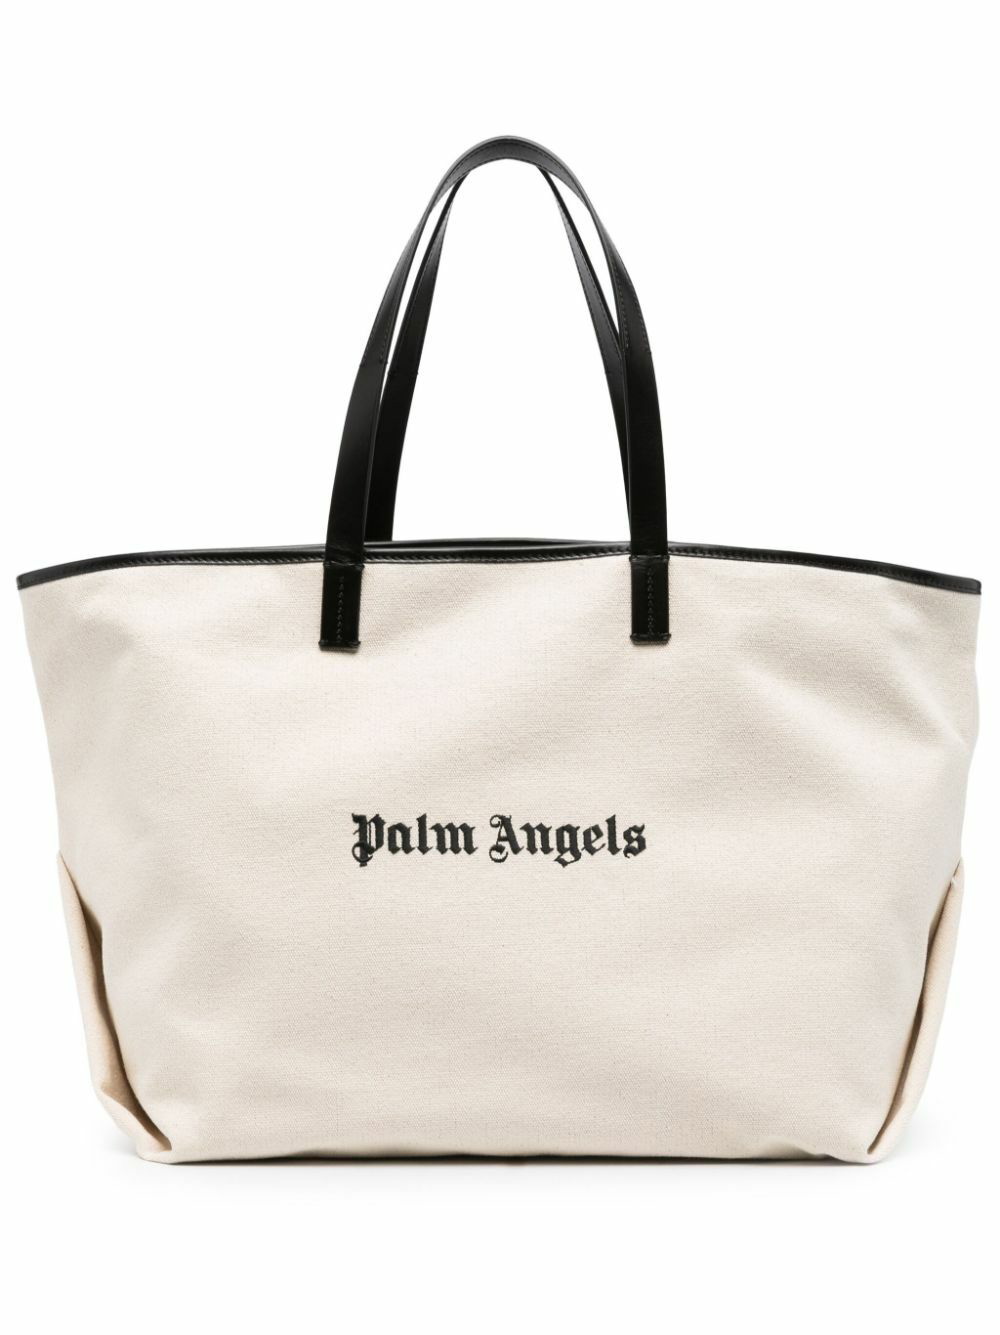 PALM ANGELS - Logo Tote Bag Palm Angels